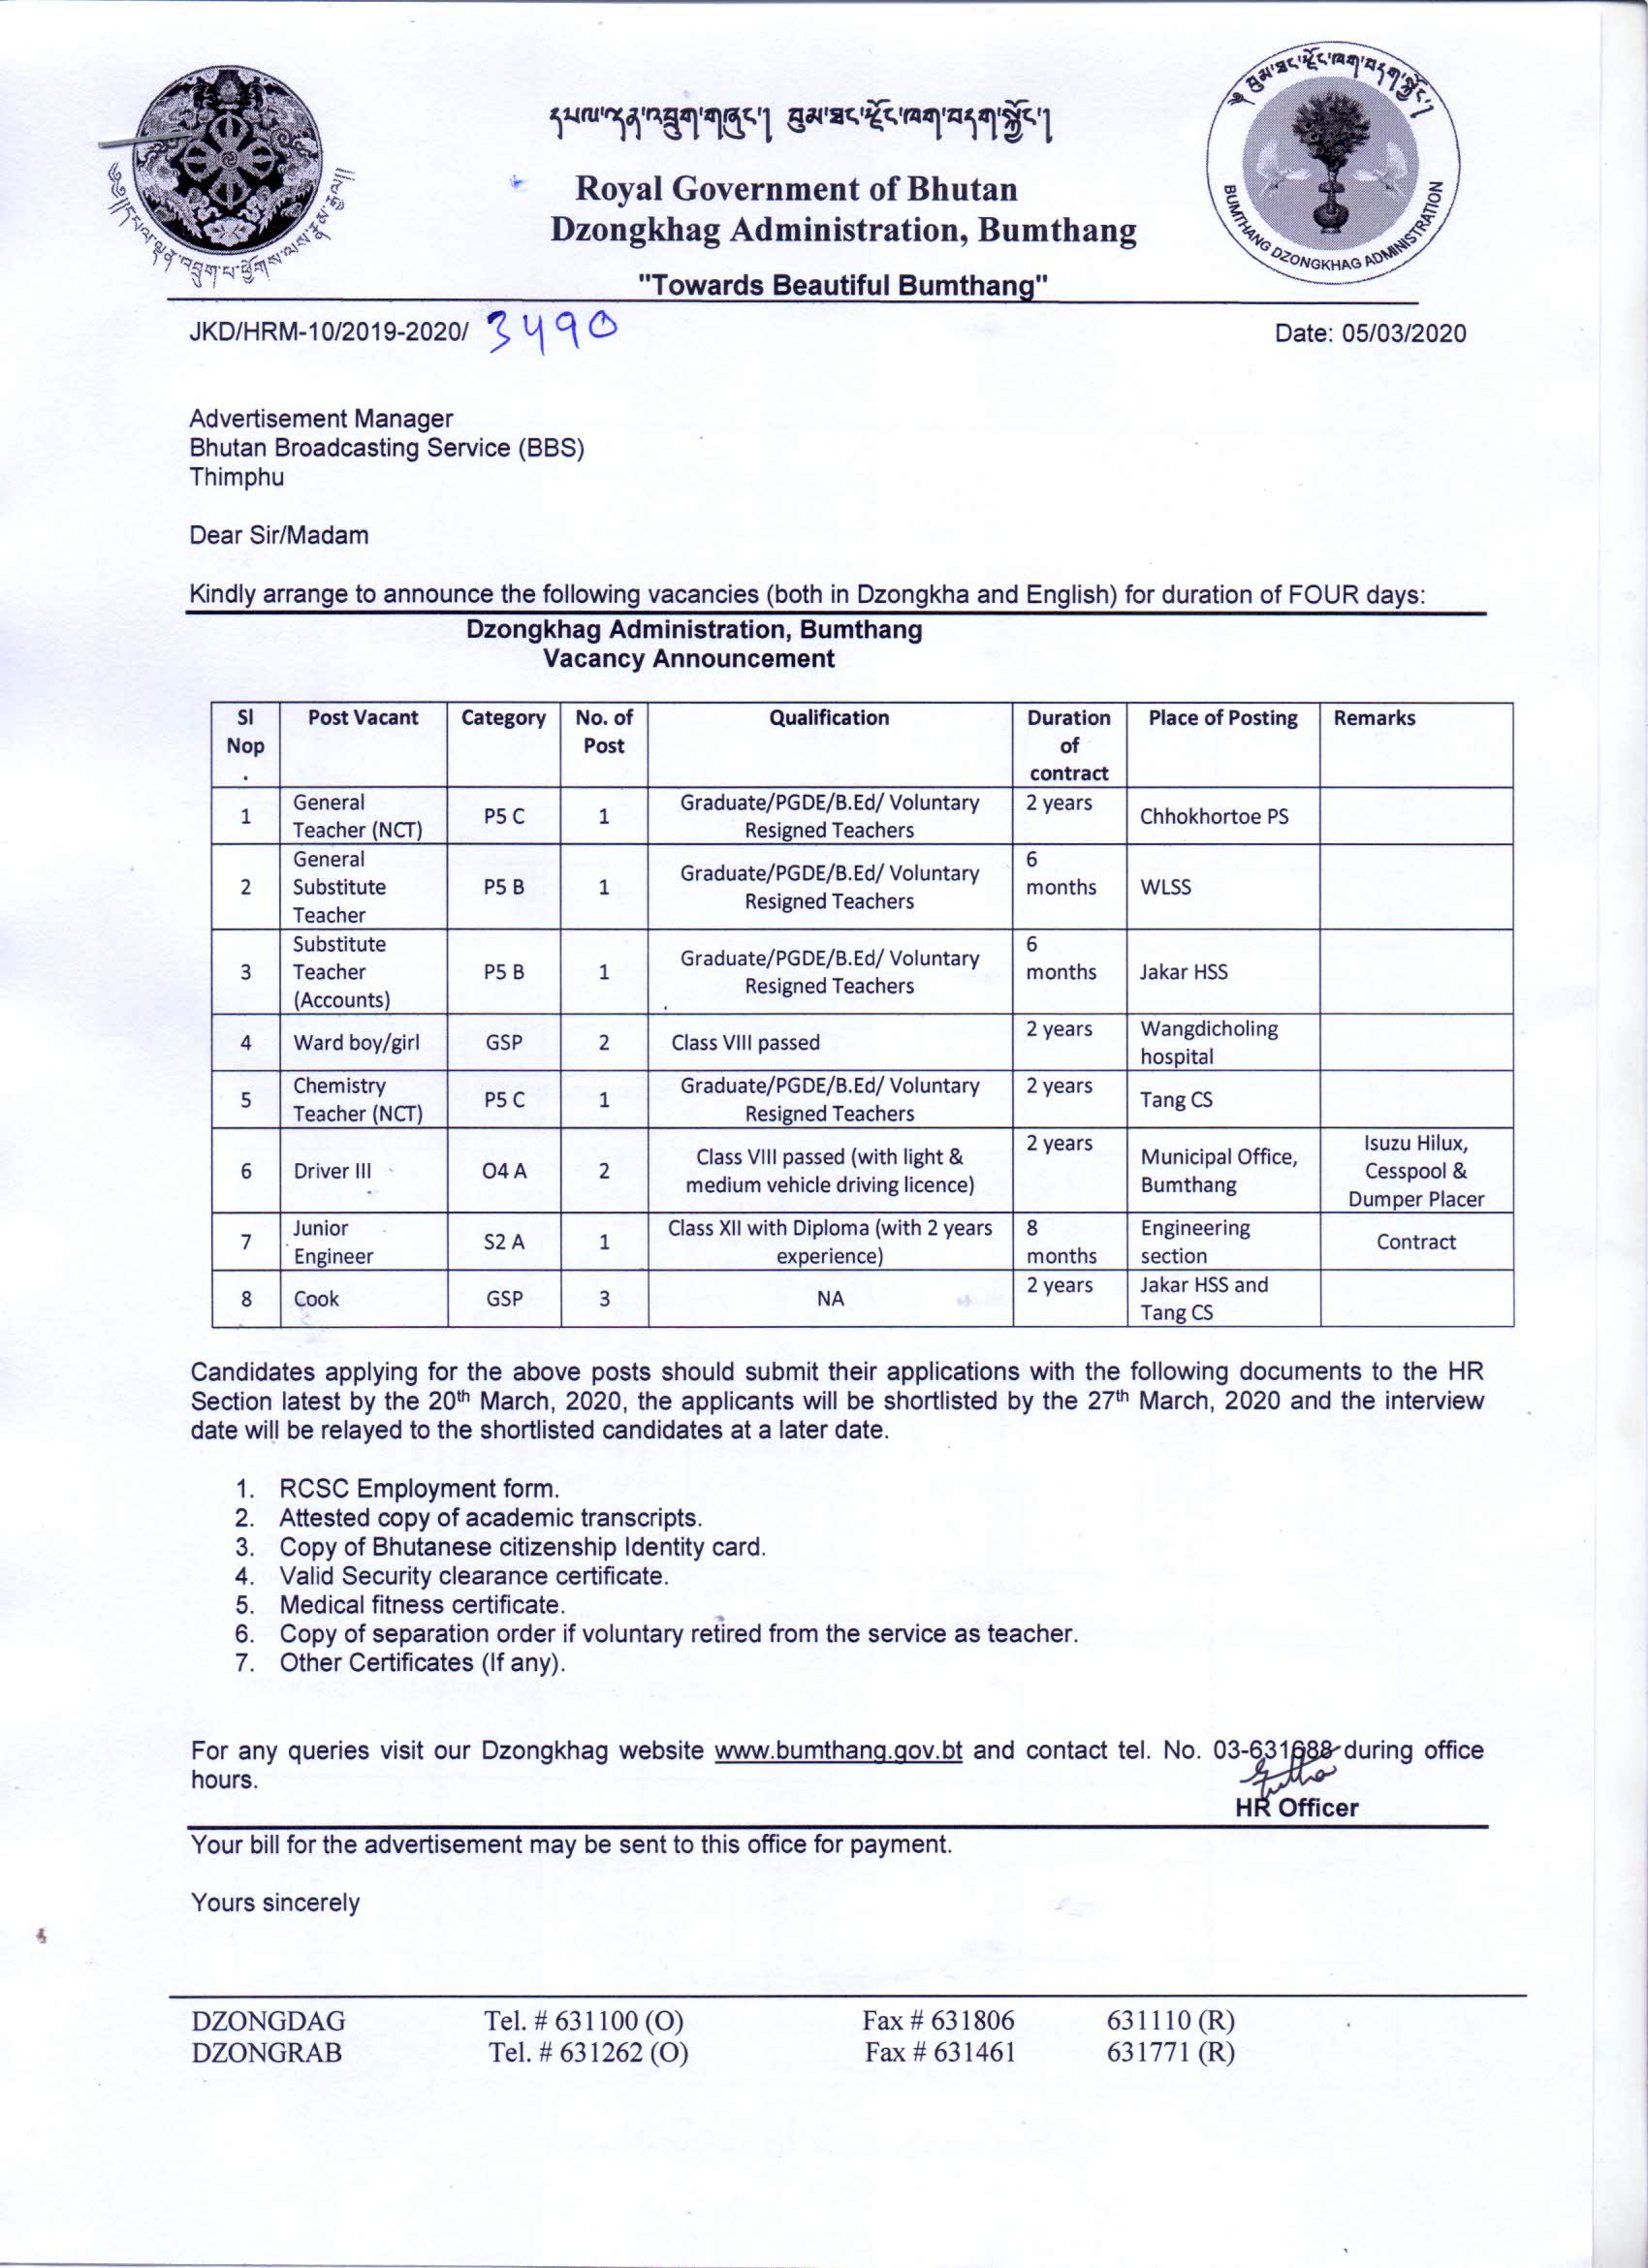 Vacancy announcements for various post, Bumthang Dzongkhag